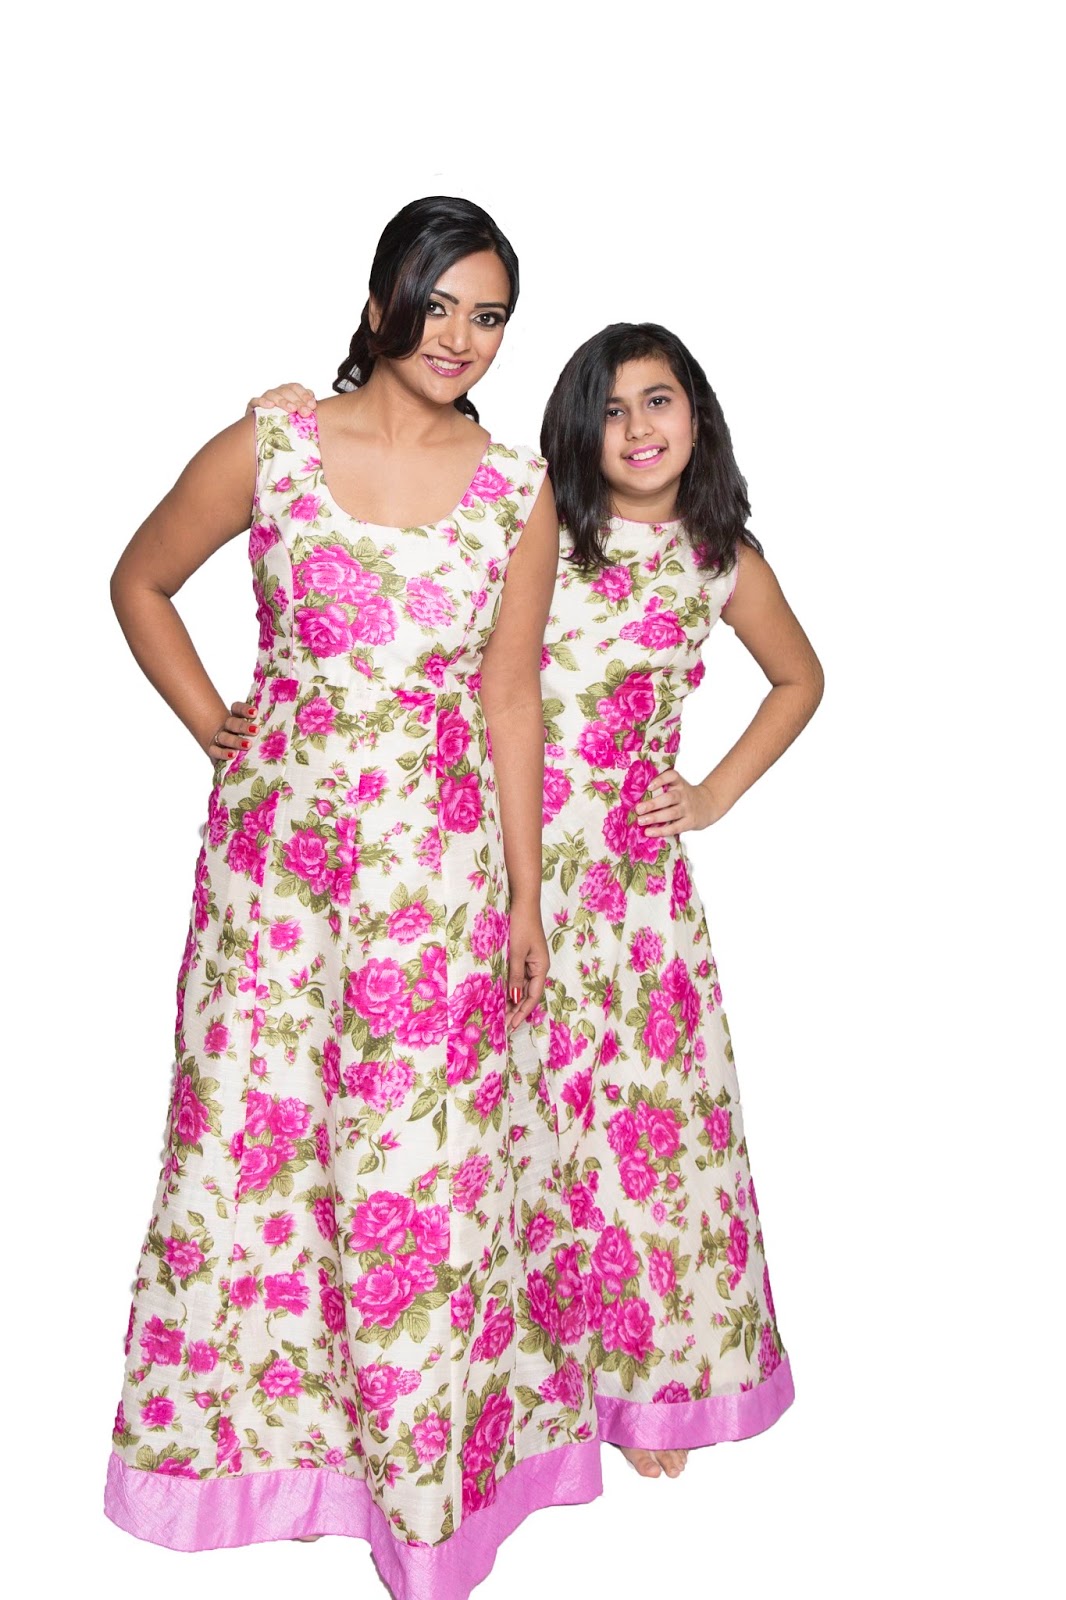 Floral Maxi Dress for Spring , floral dresses, similar dresses for sisters, two girls wearing same dresses, 2016 floral trend